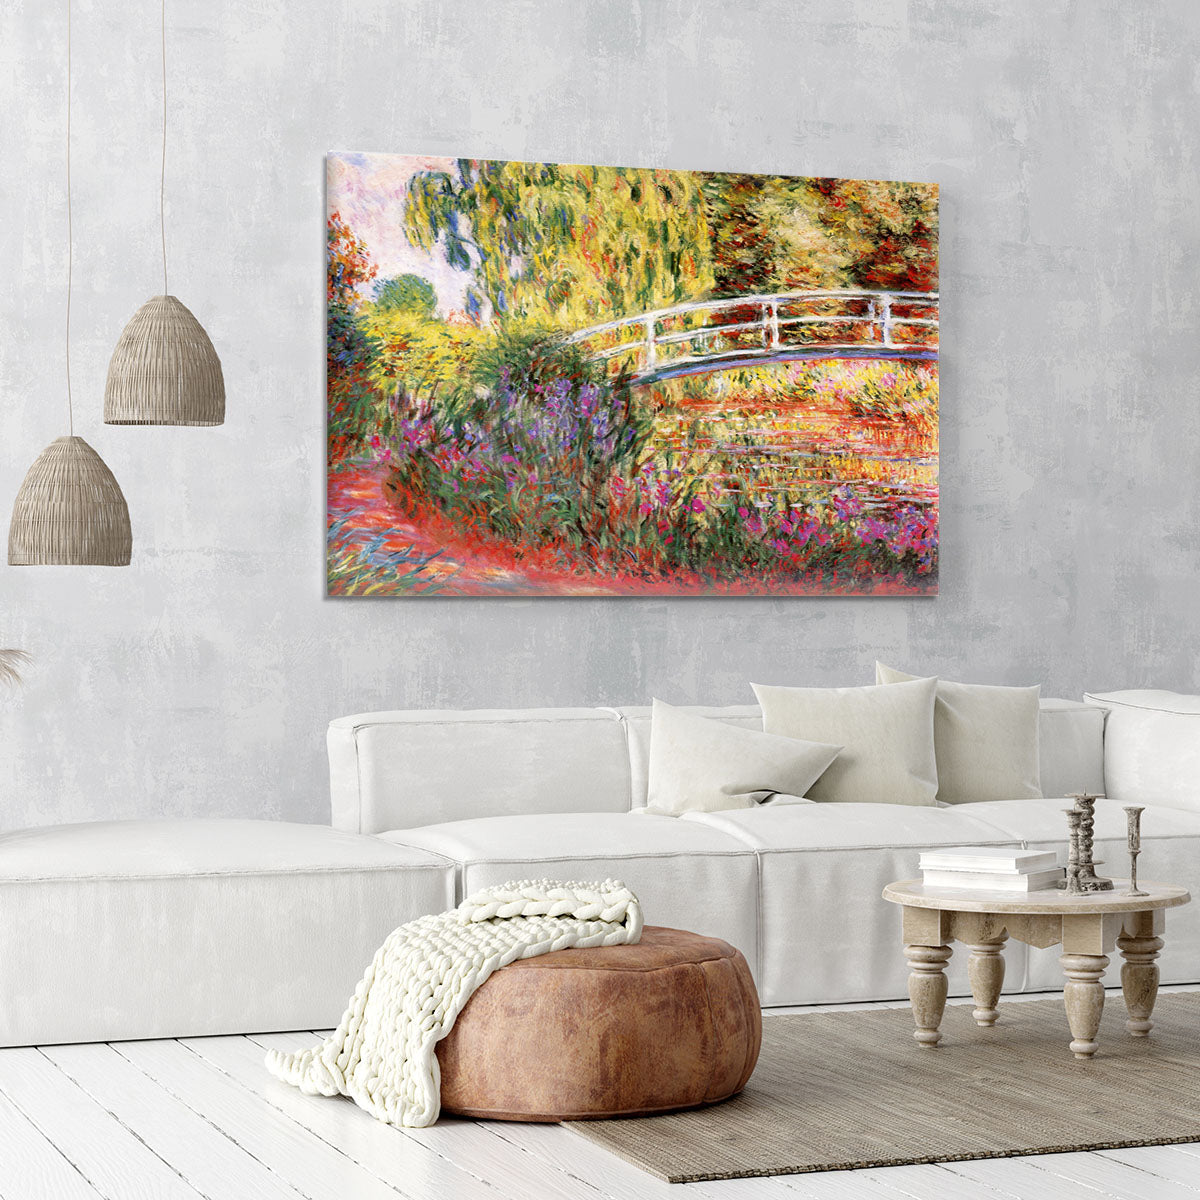 Le Bassin aux Nympheas by Monet Canvas Print or Poster - Canvas Art Rocks - 6